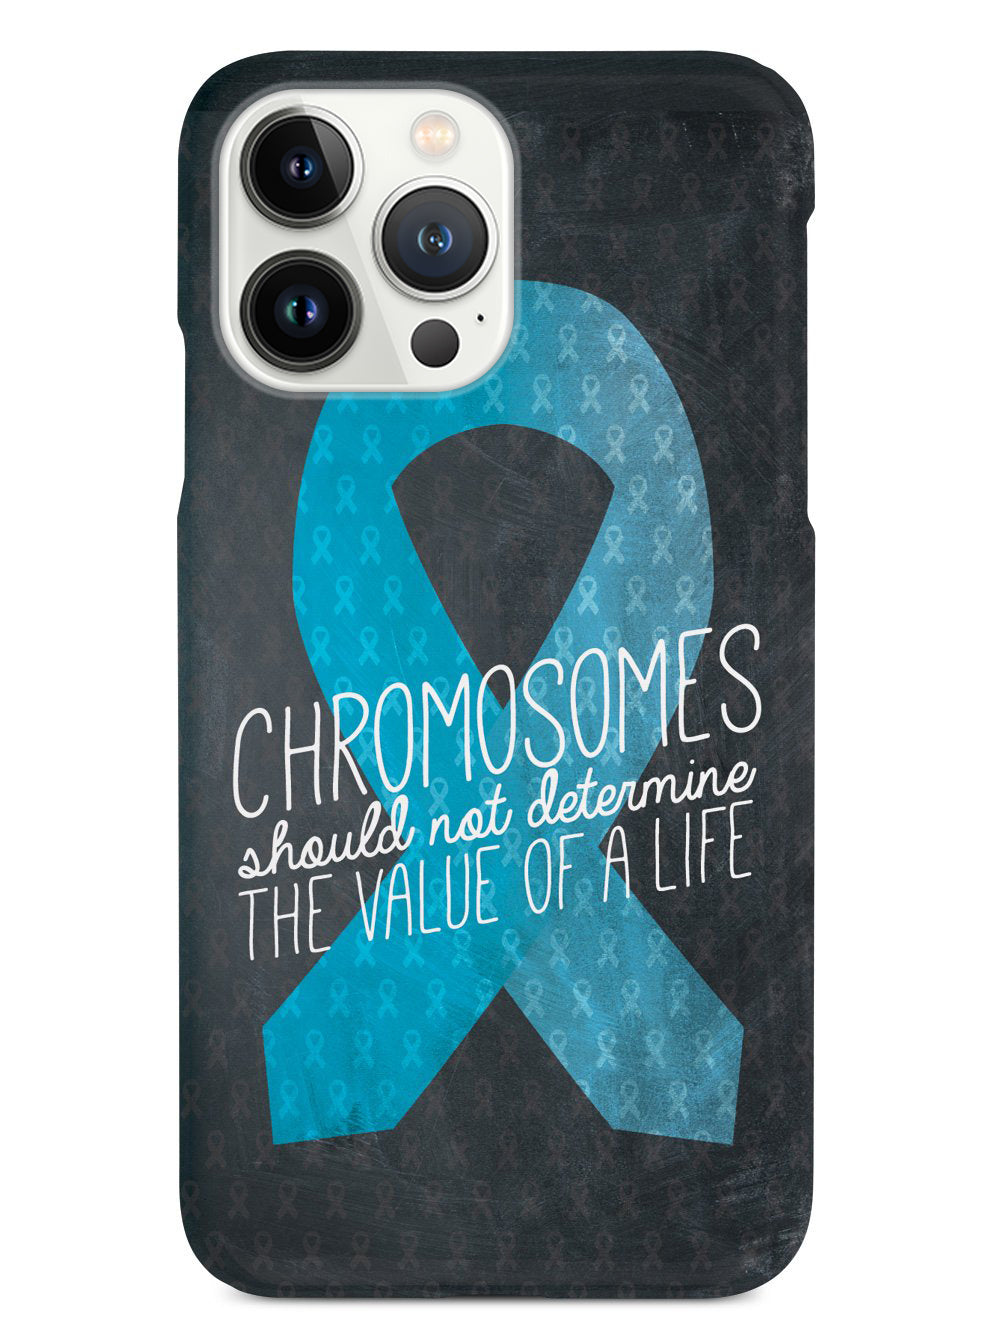 Chromosomes - The Value of Life Case